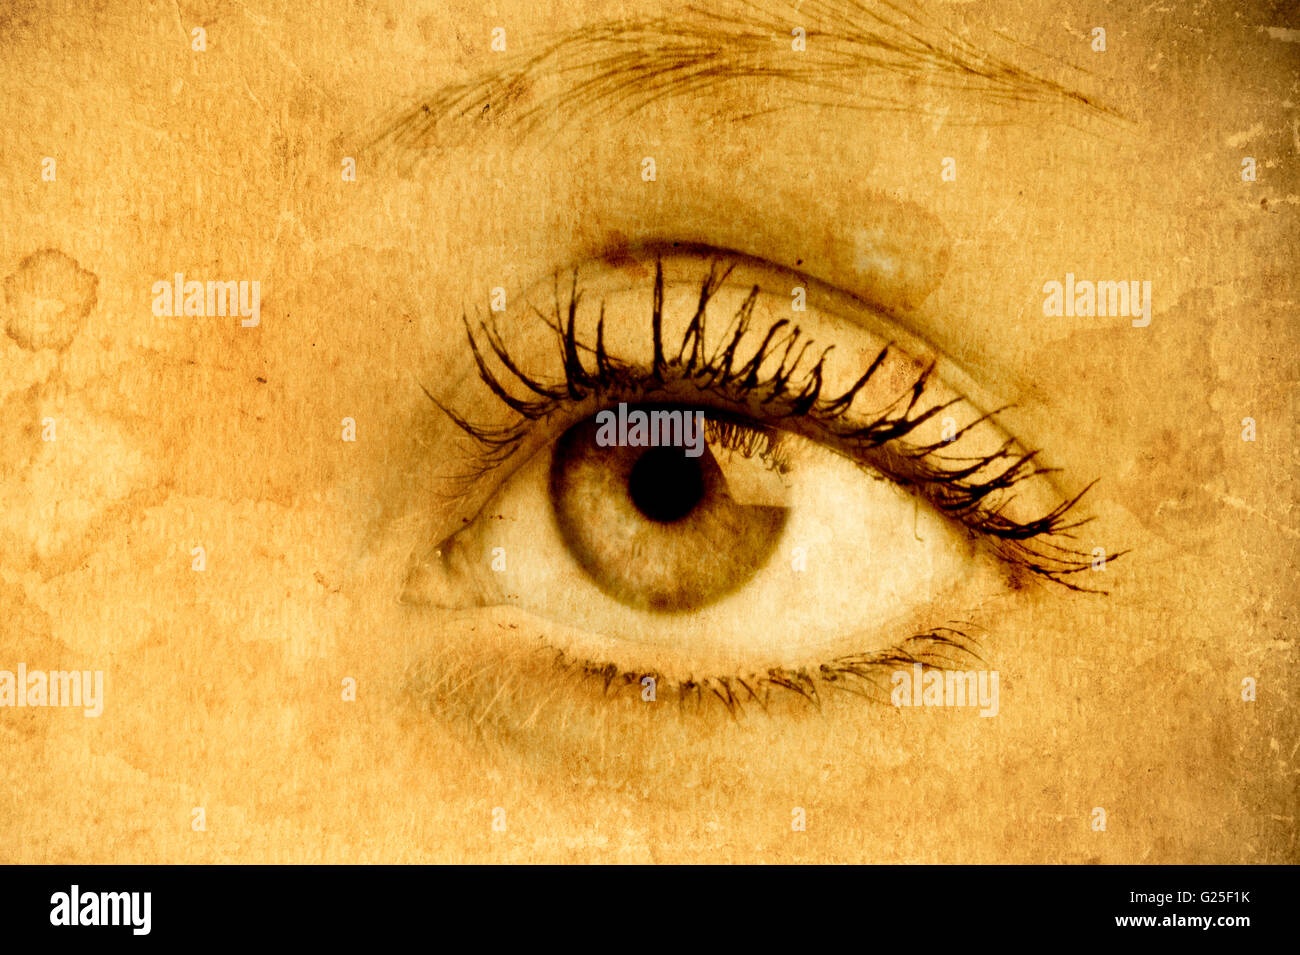 woman eye with grunge effect Stock Photo